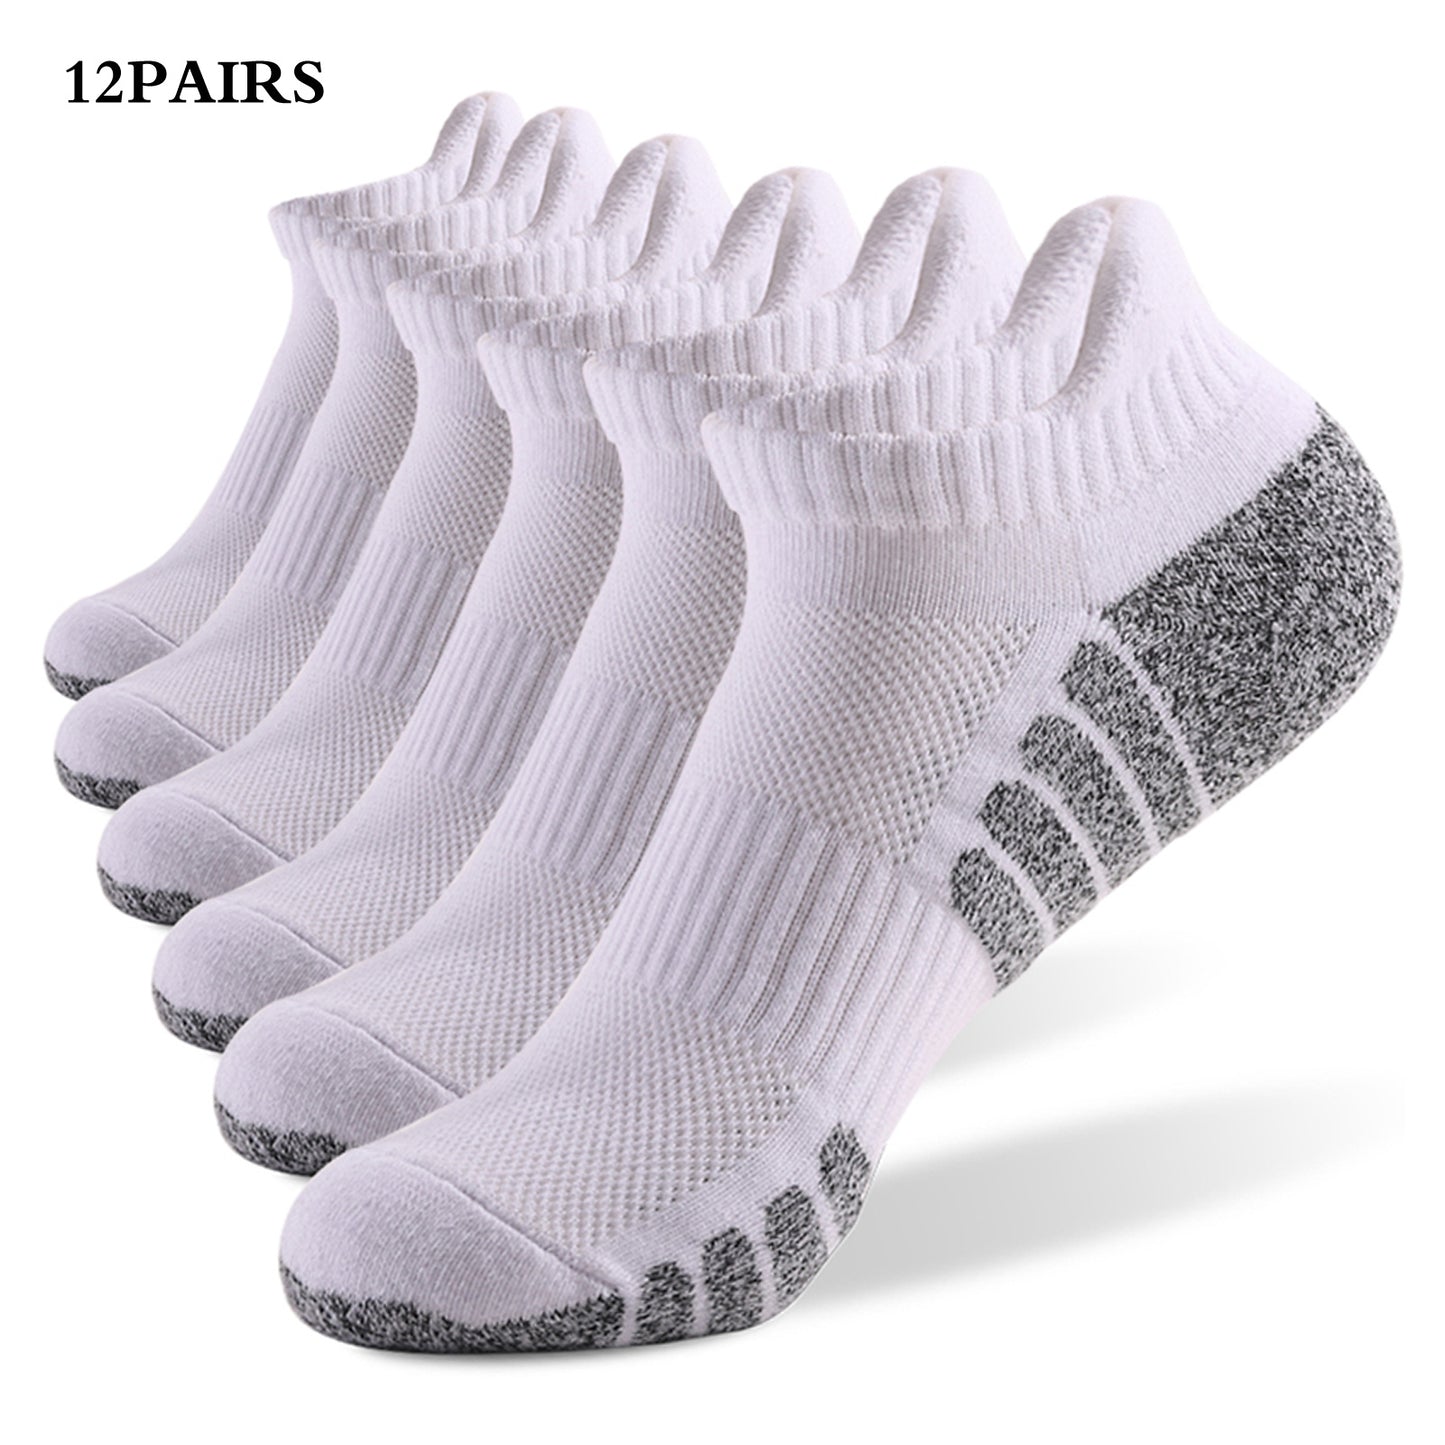 New Thick Towel Bottom Running Non-slip Cotton Socks